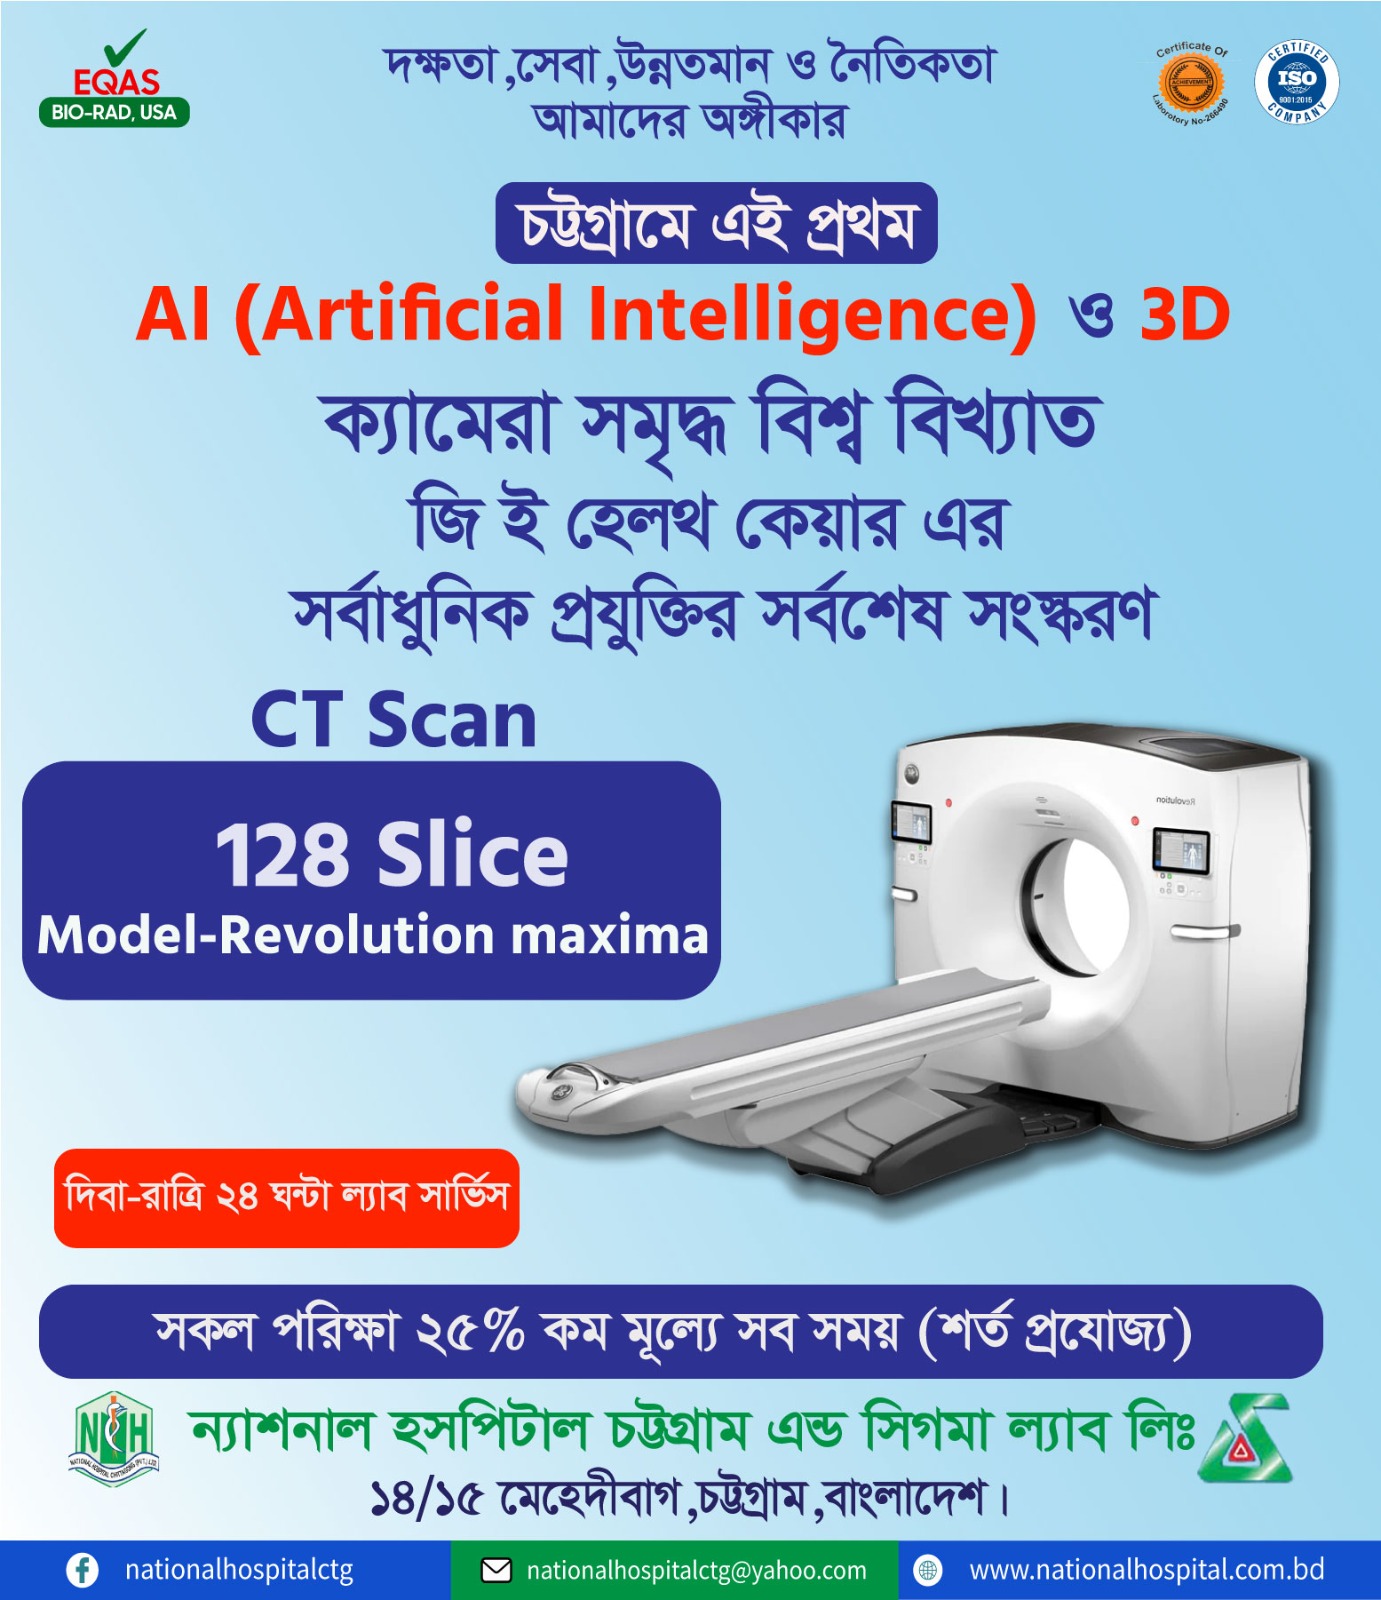 CT scan price in Bangladesh